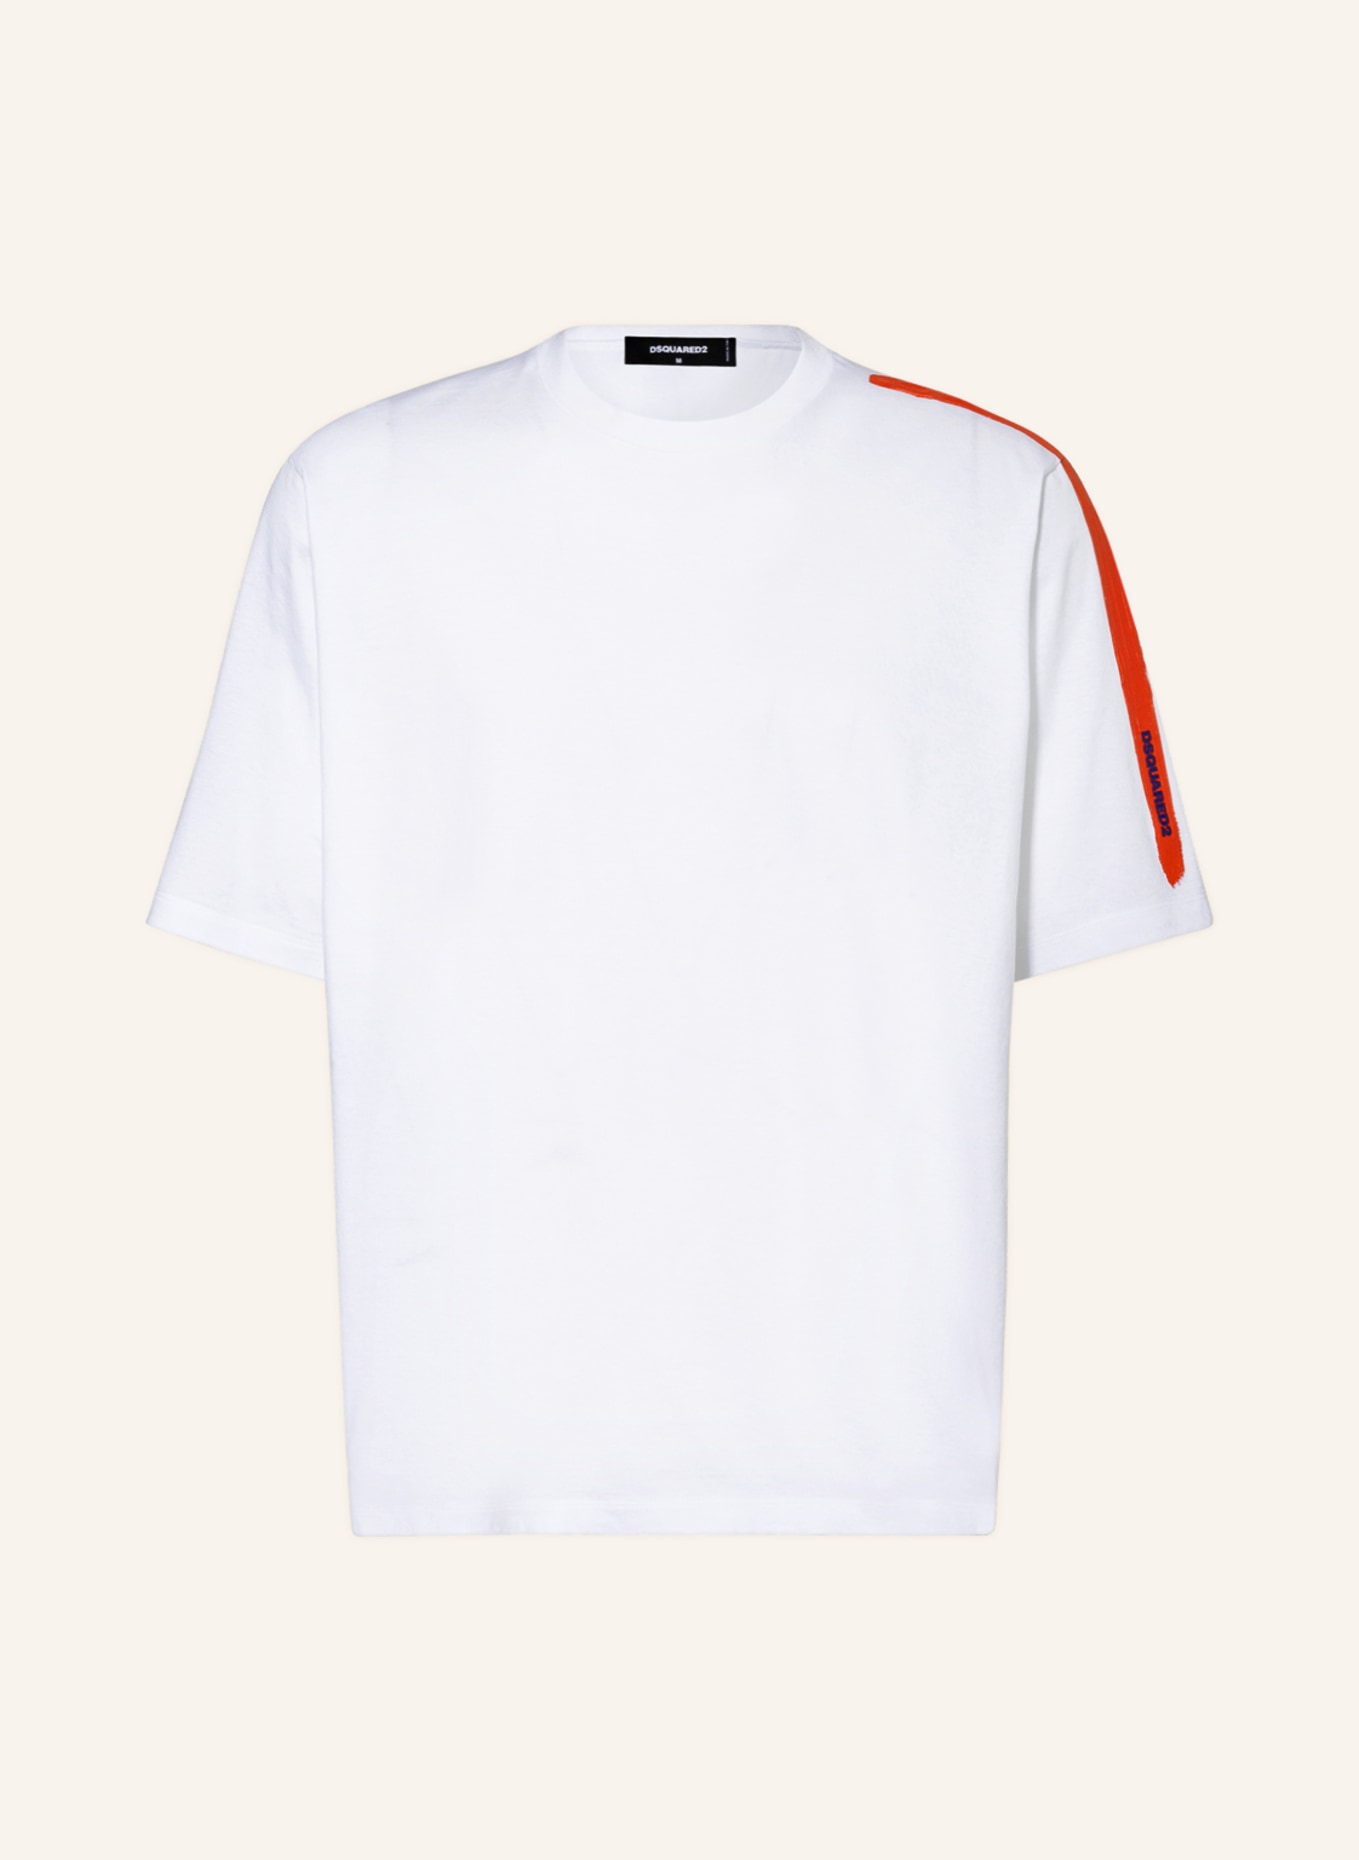 DSQUARED2 T-Shirt, Farbe: WEISS (Bild 1)